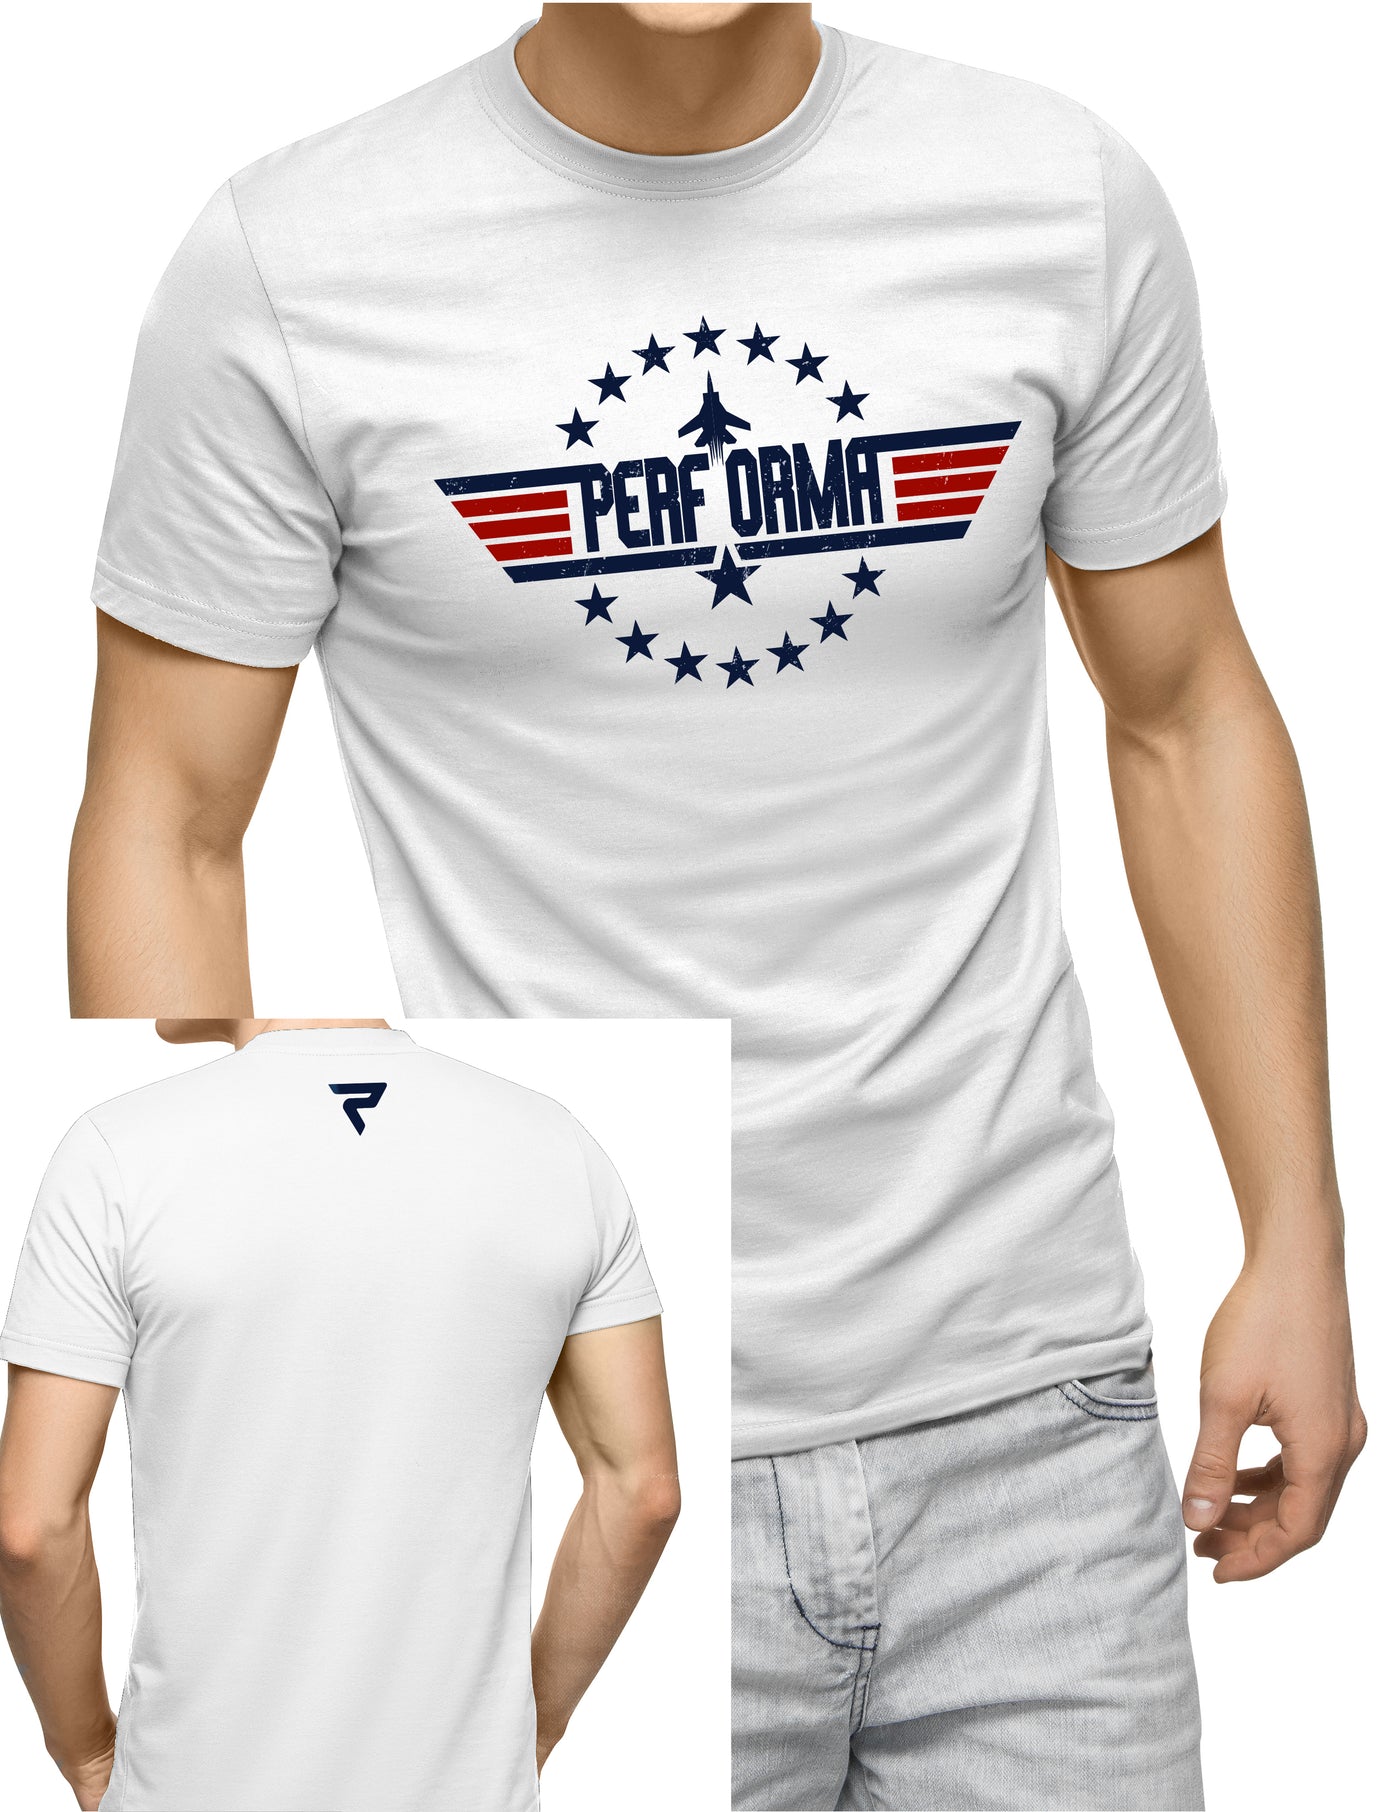 Performa Apparel, Men's T-Shirt, Top Gun (Made to Order)